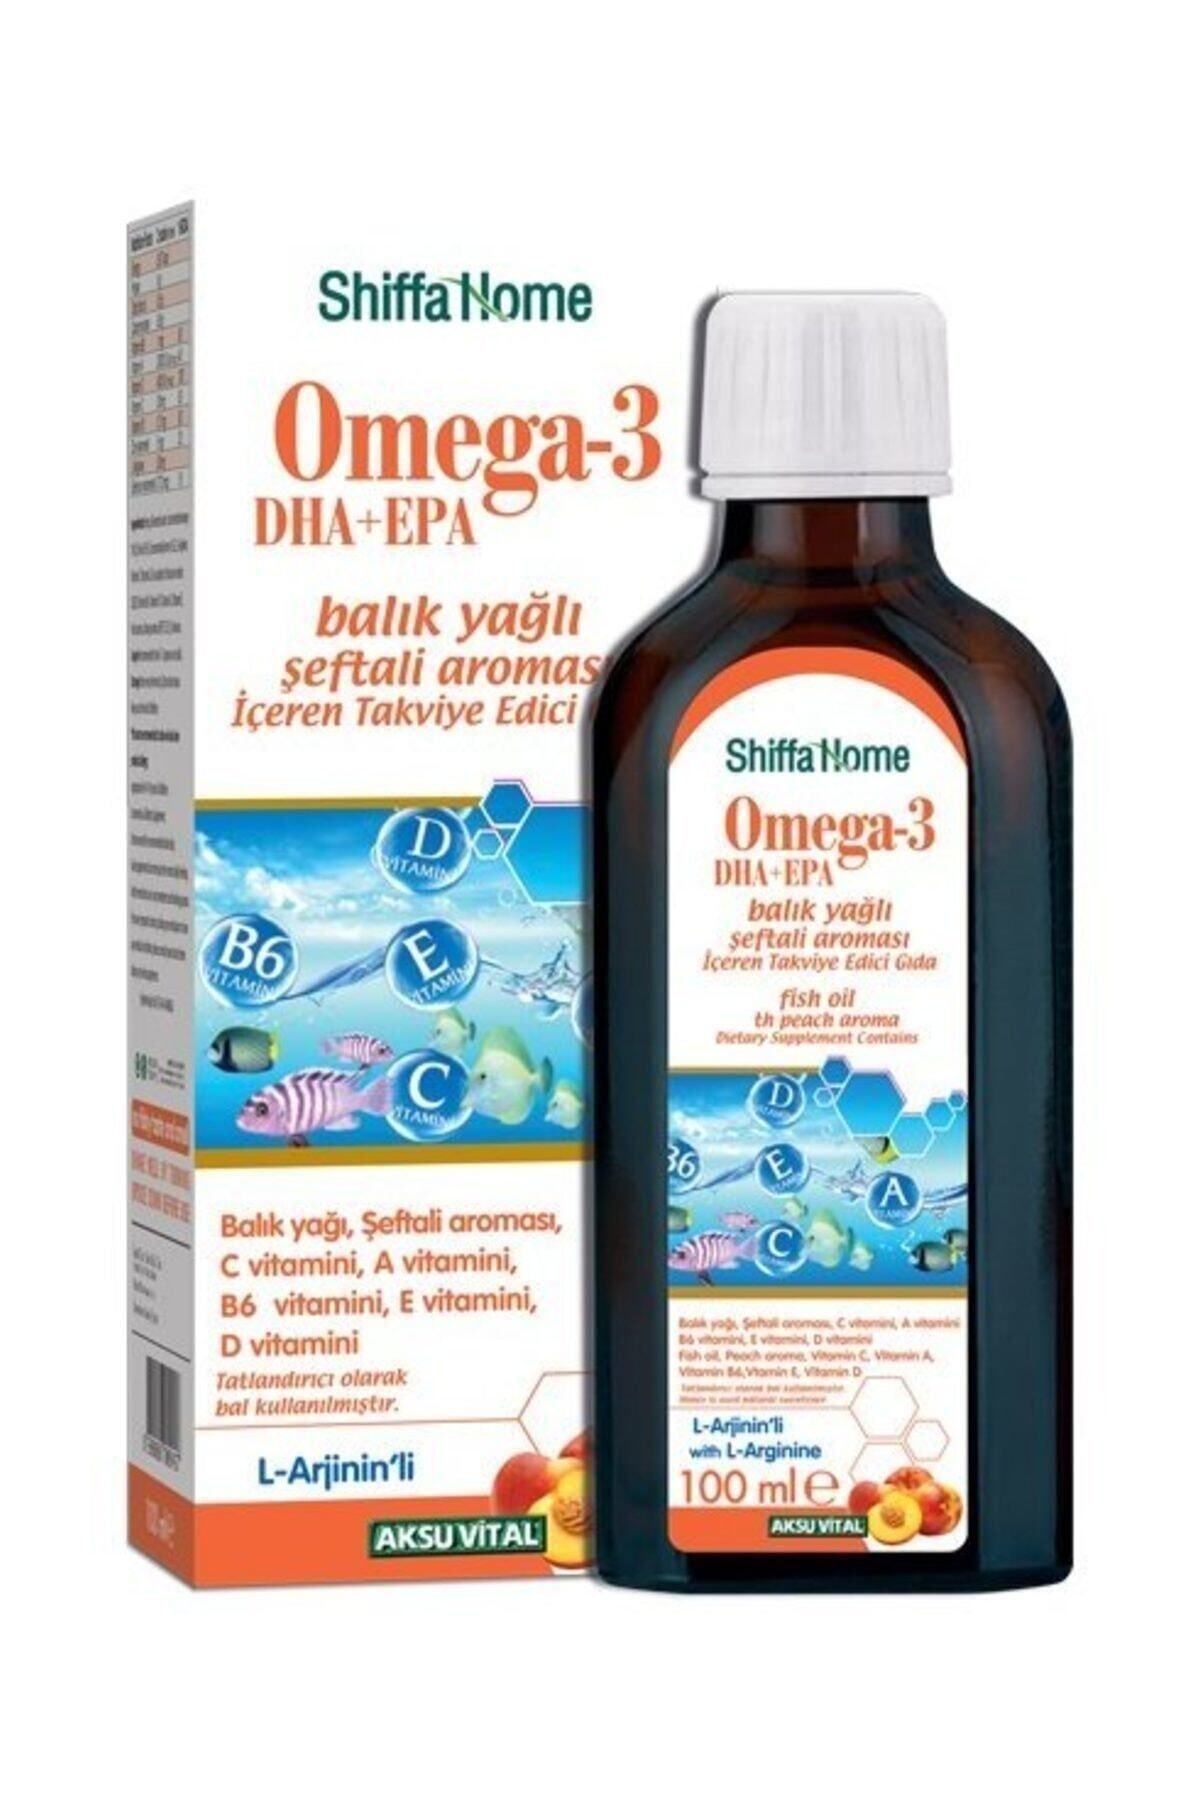 Aksu Vital Shiffa Home Omega-3 Epa+dha Balık Yağı Şeftali Aromalı